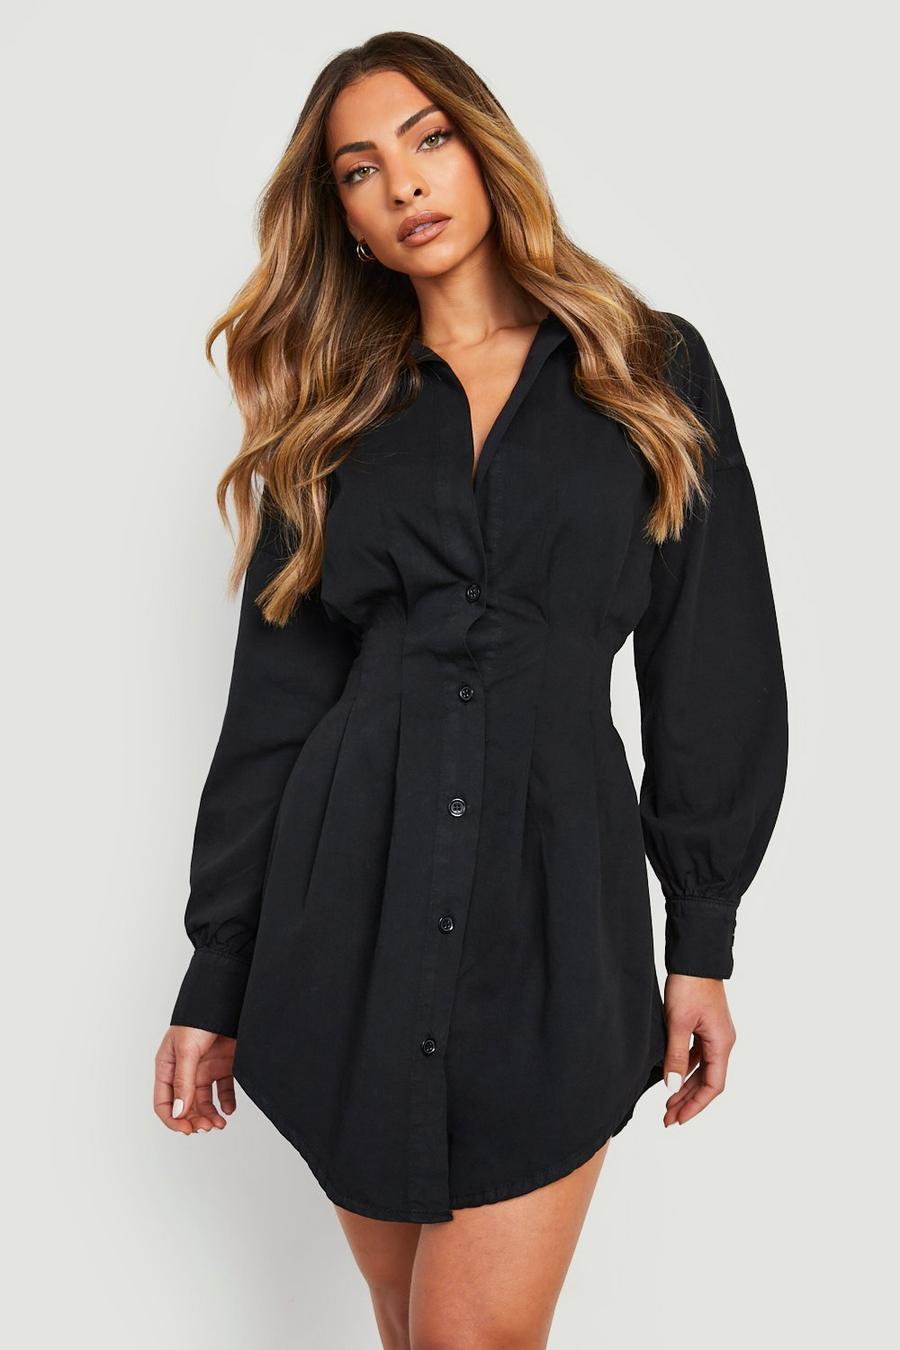 https://media.boohoo.com/i/boohoo/fzz40535_black_xl/female-black-shaped-waist-denim-shirt-dress/?w=900&qlt=default&fmt.jp2.qlt=70&fmt=auto&sm=fit